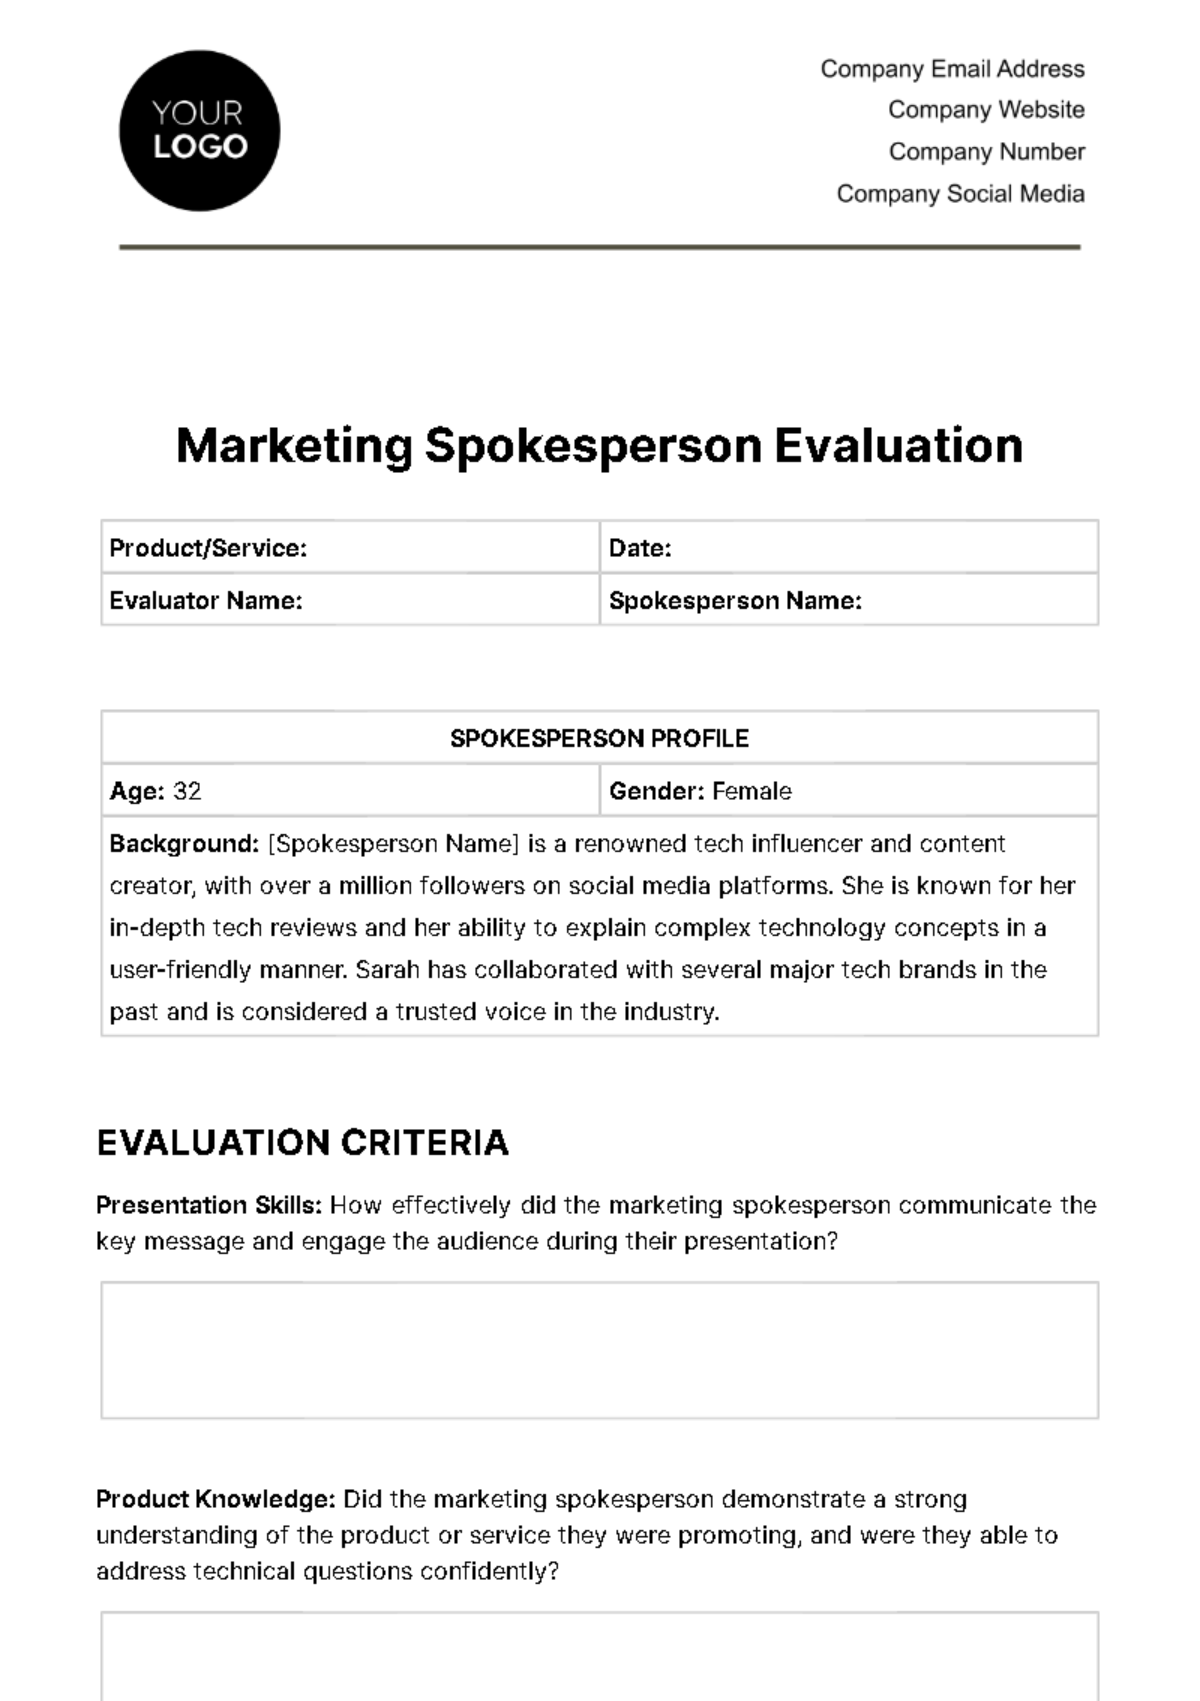 Free Marketing Spokesperson Evaluation Template